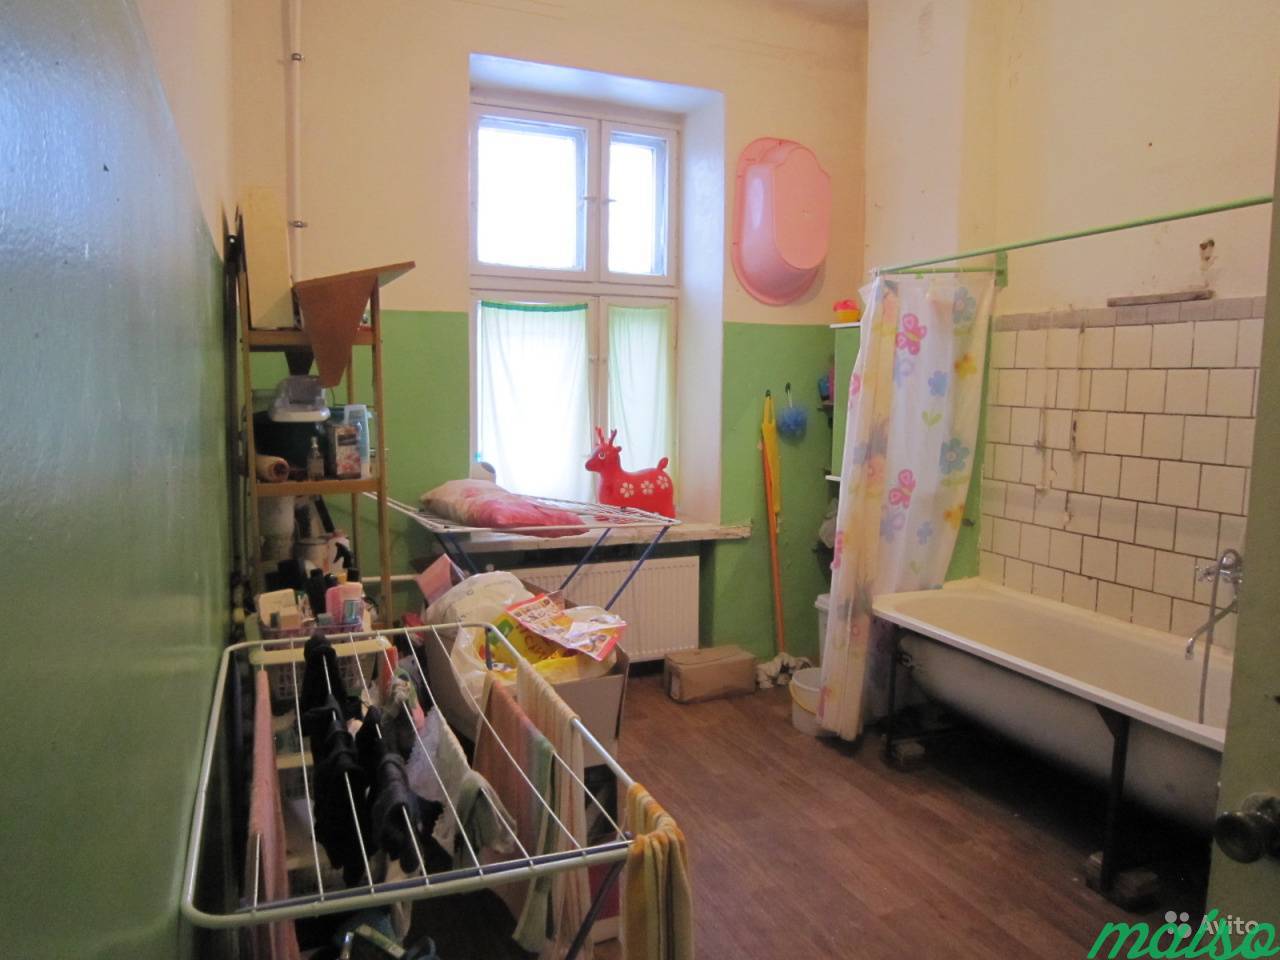 Комната 16 м² в 5-к, 3/3 эт. в Санкт-Петербурге. Фото 8